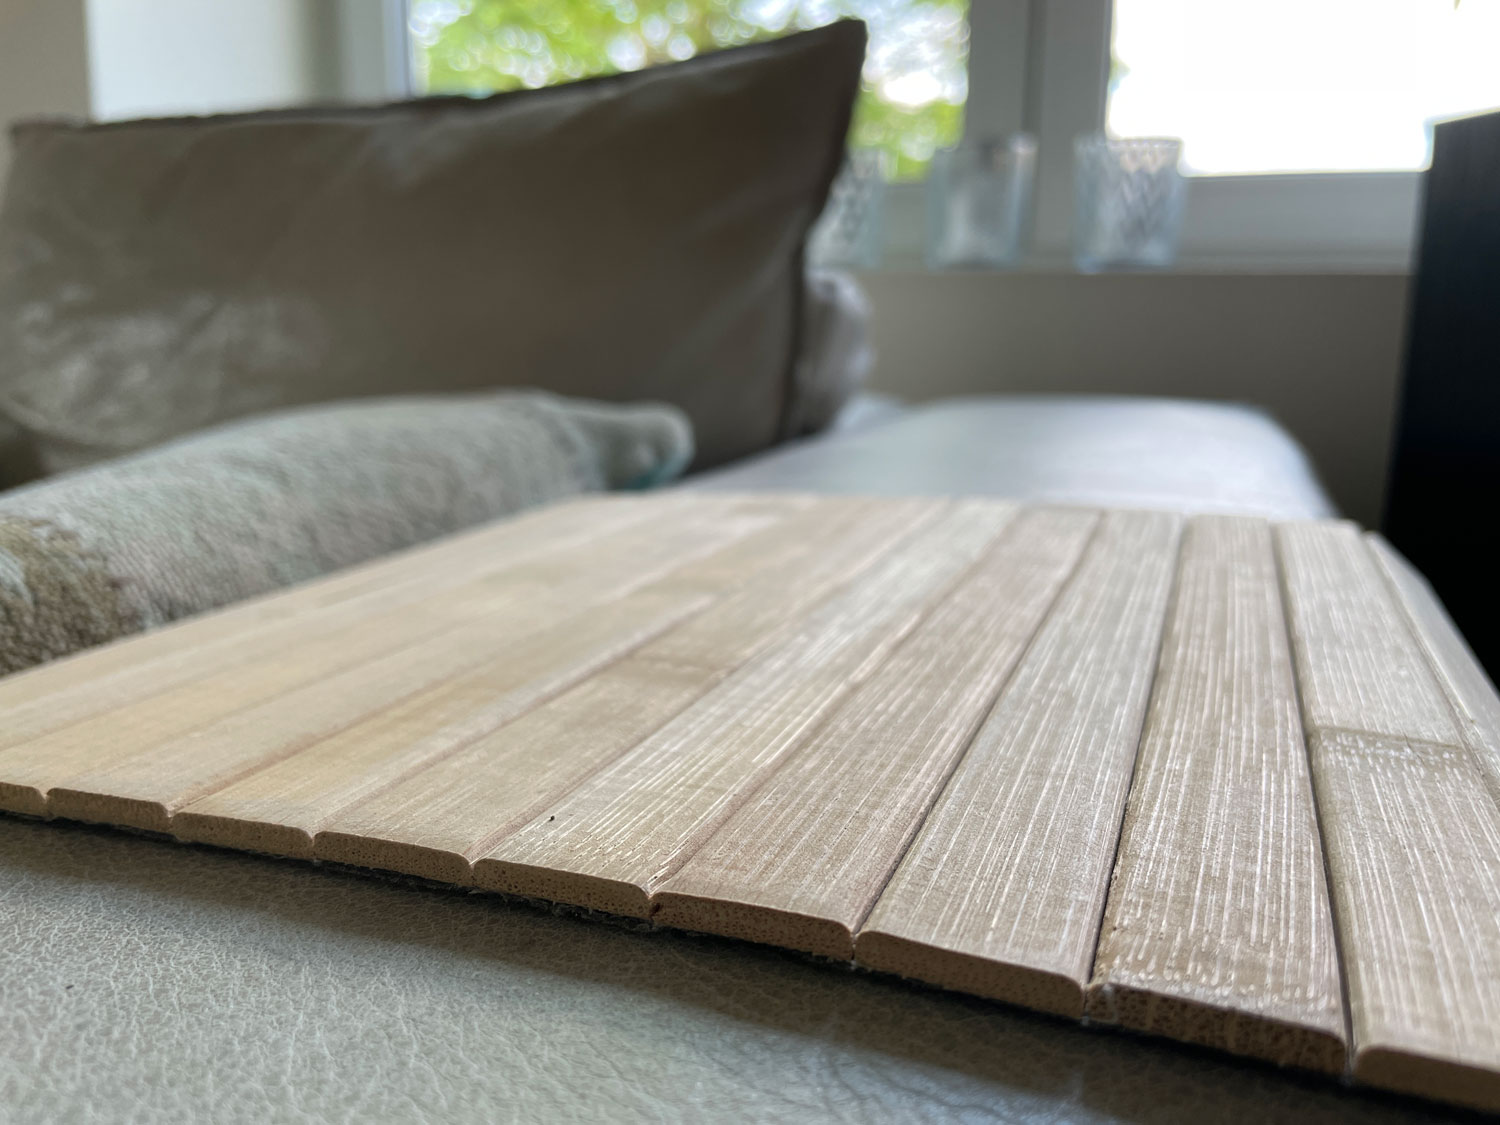 ONVAYA Tablett Sofatablett aus Holz, Bambus Couch-Tablett